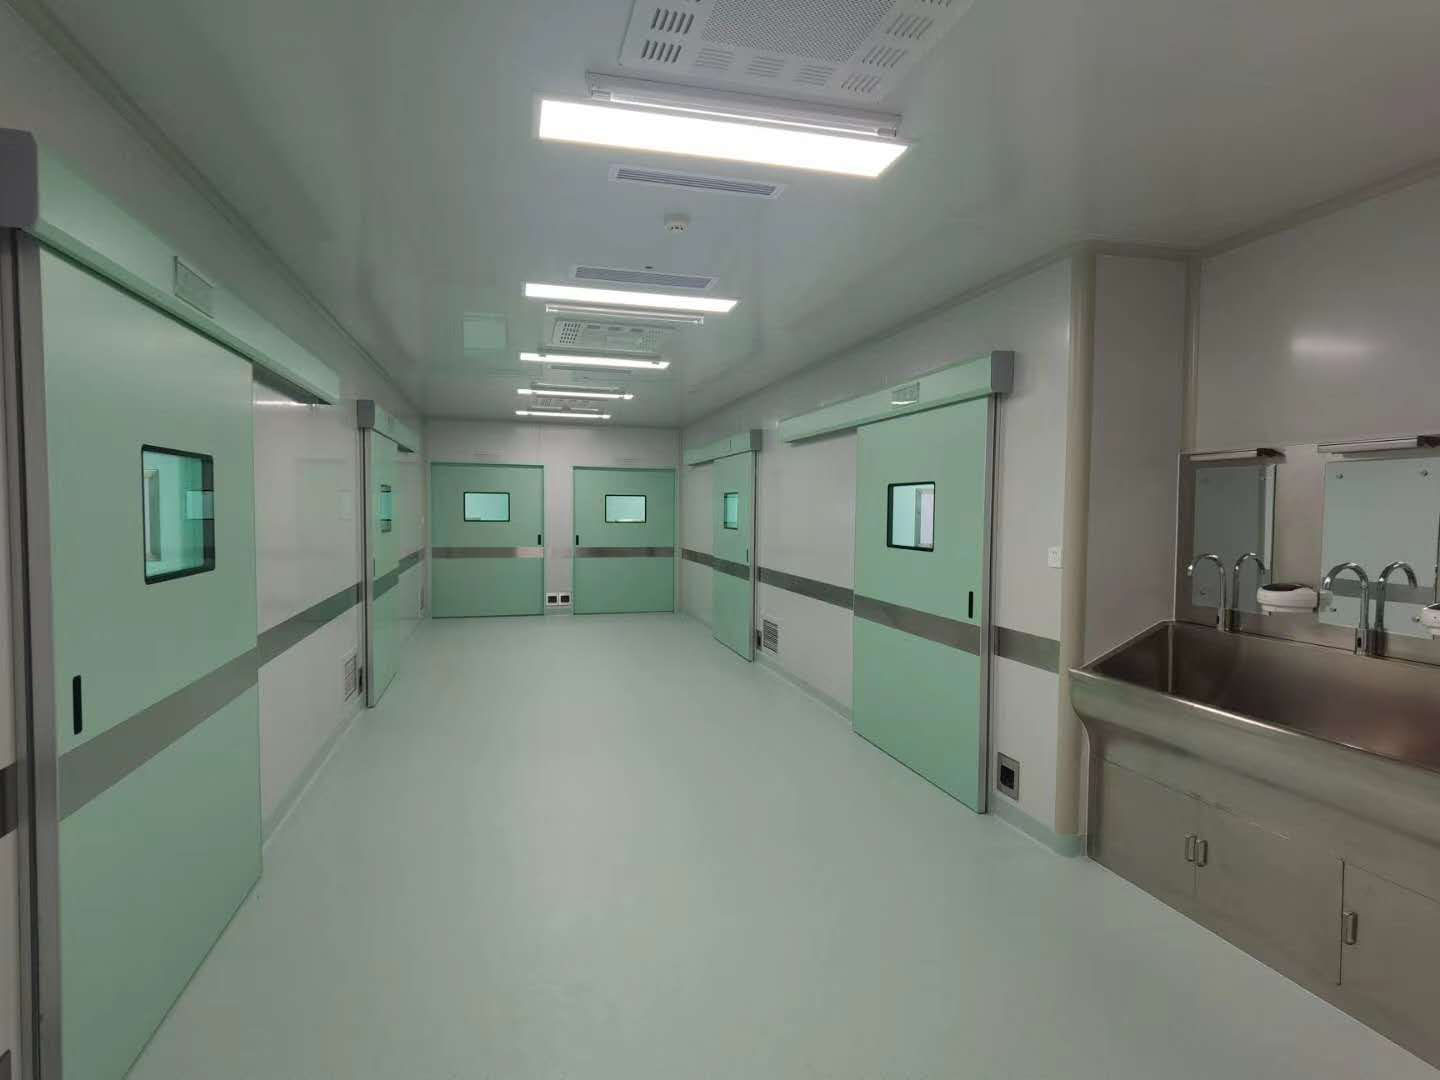 Sisè Hospital del Poble de Shenyang